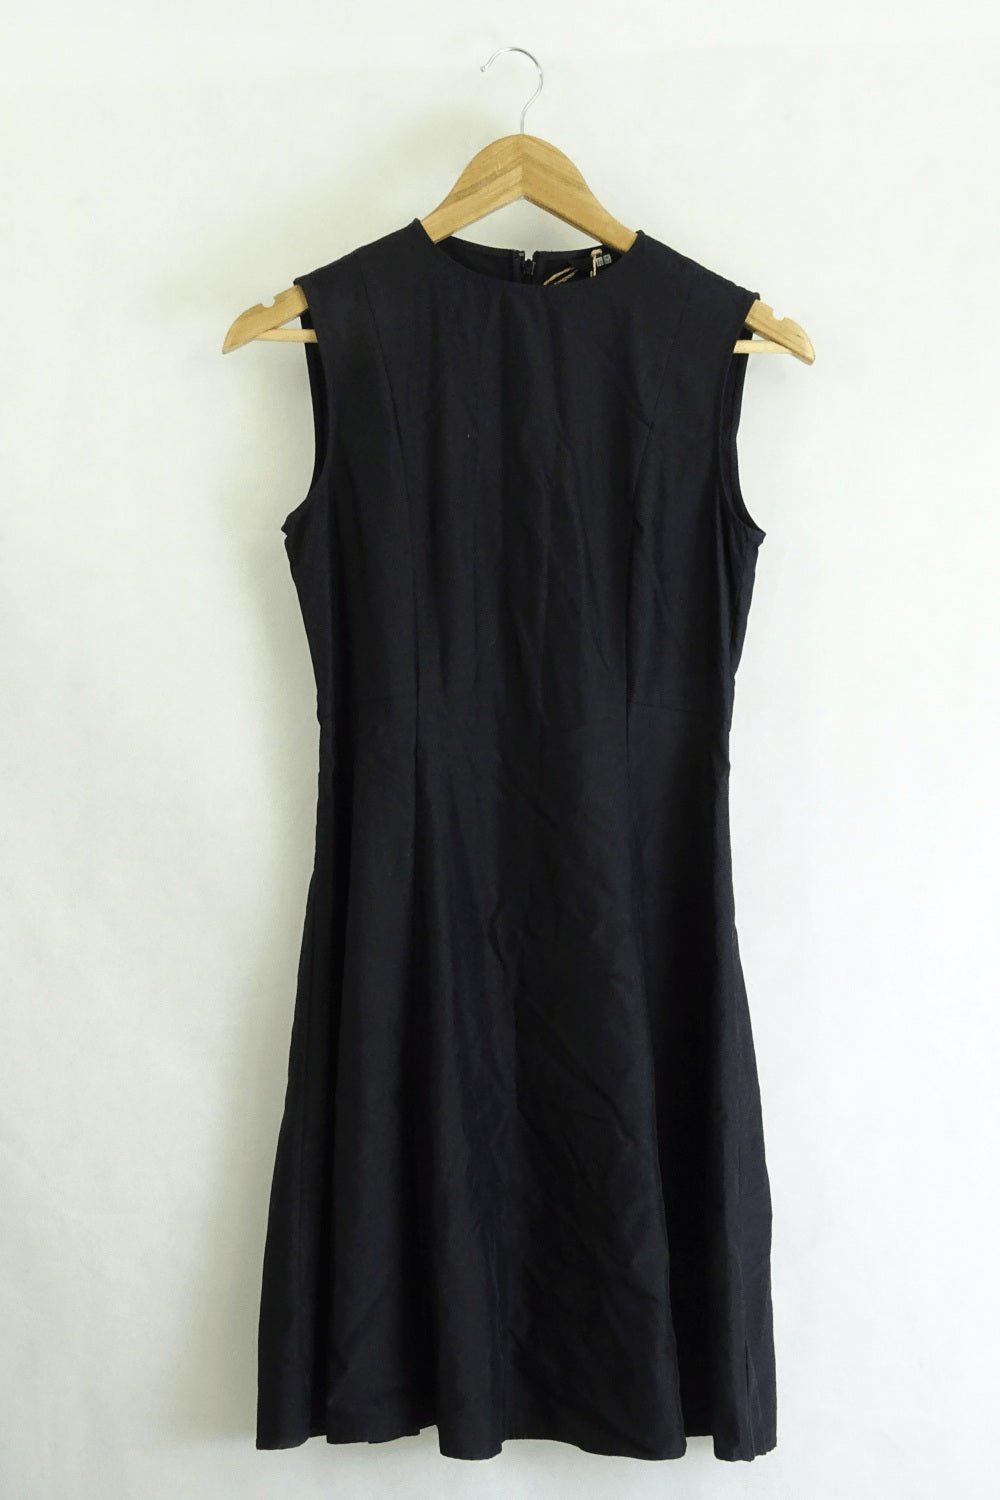 Uniqlo Black Dress XS